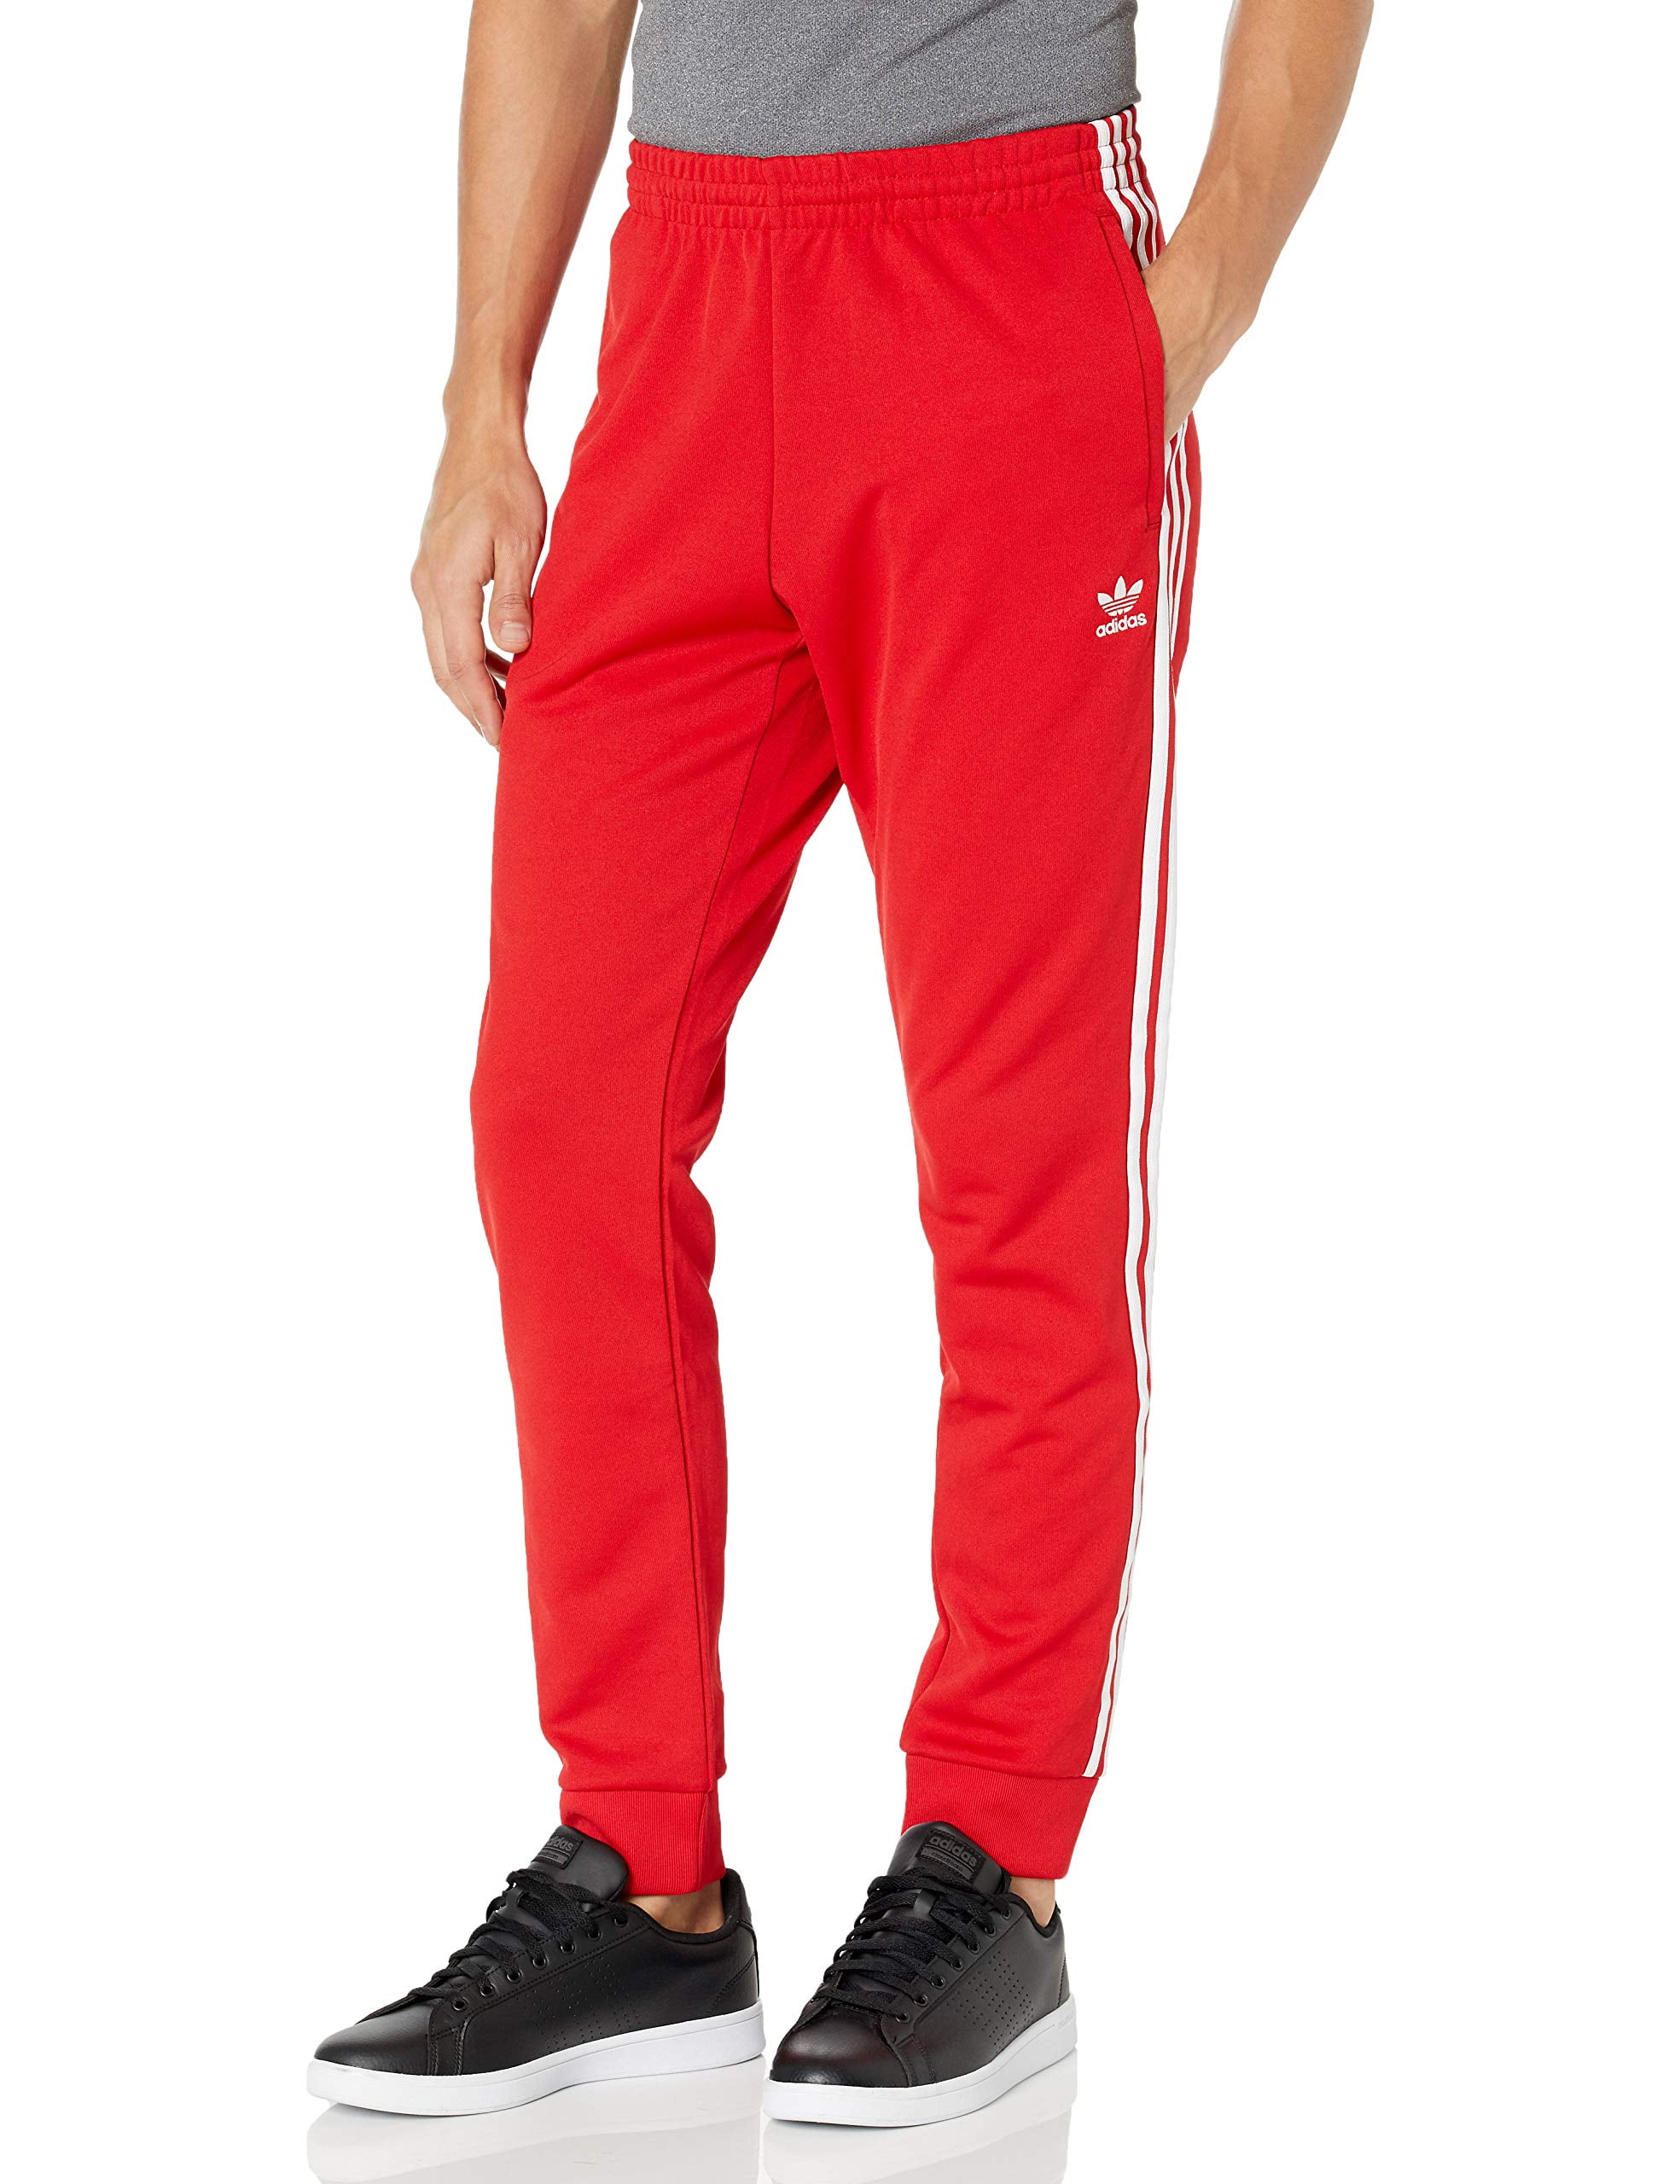 adidas Originals mens Adicolor Classics Sst Track Pants, Scarlet/White, X-Large US - Walmart.com